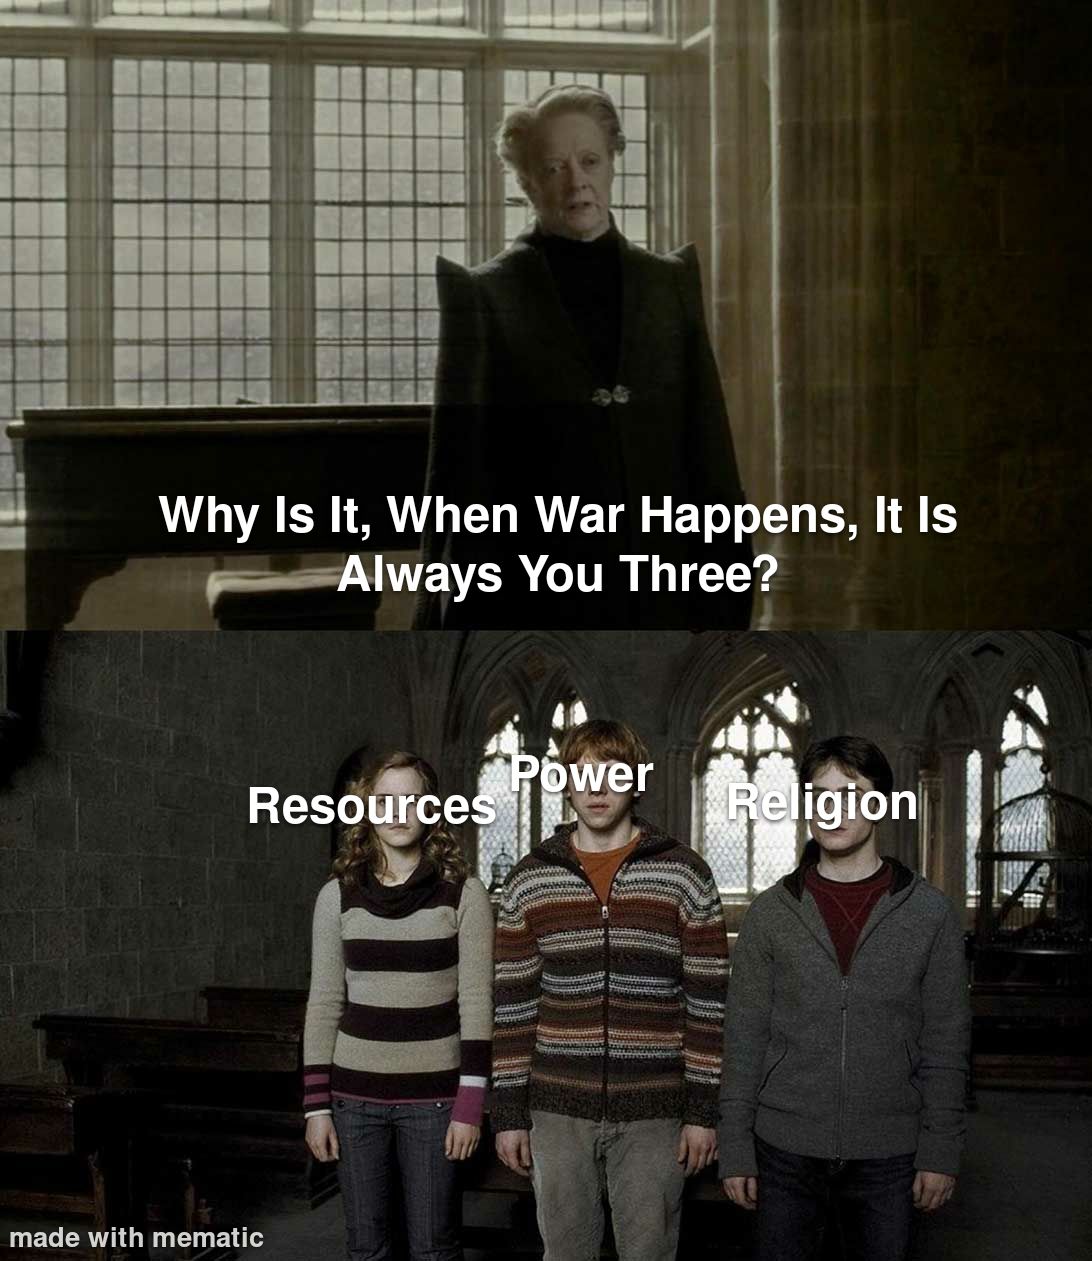 It's always these three